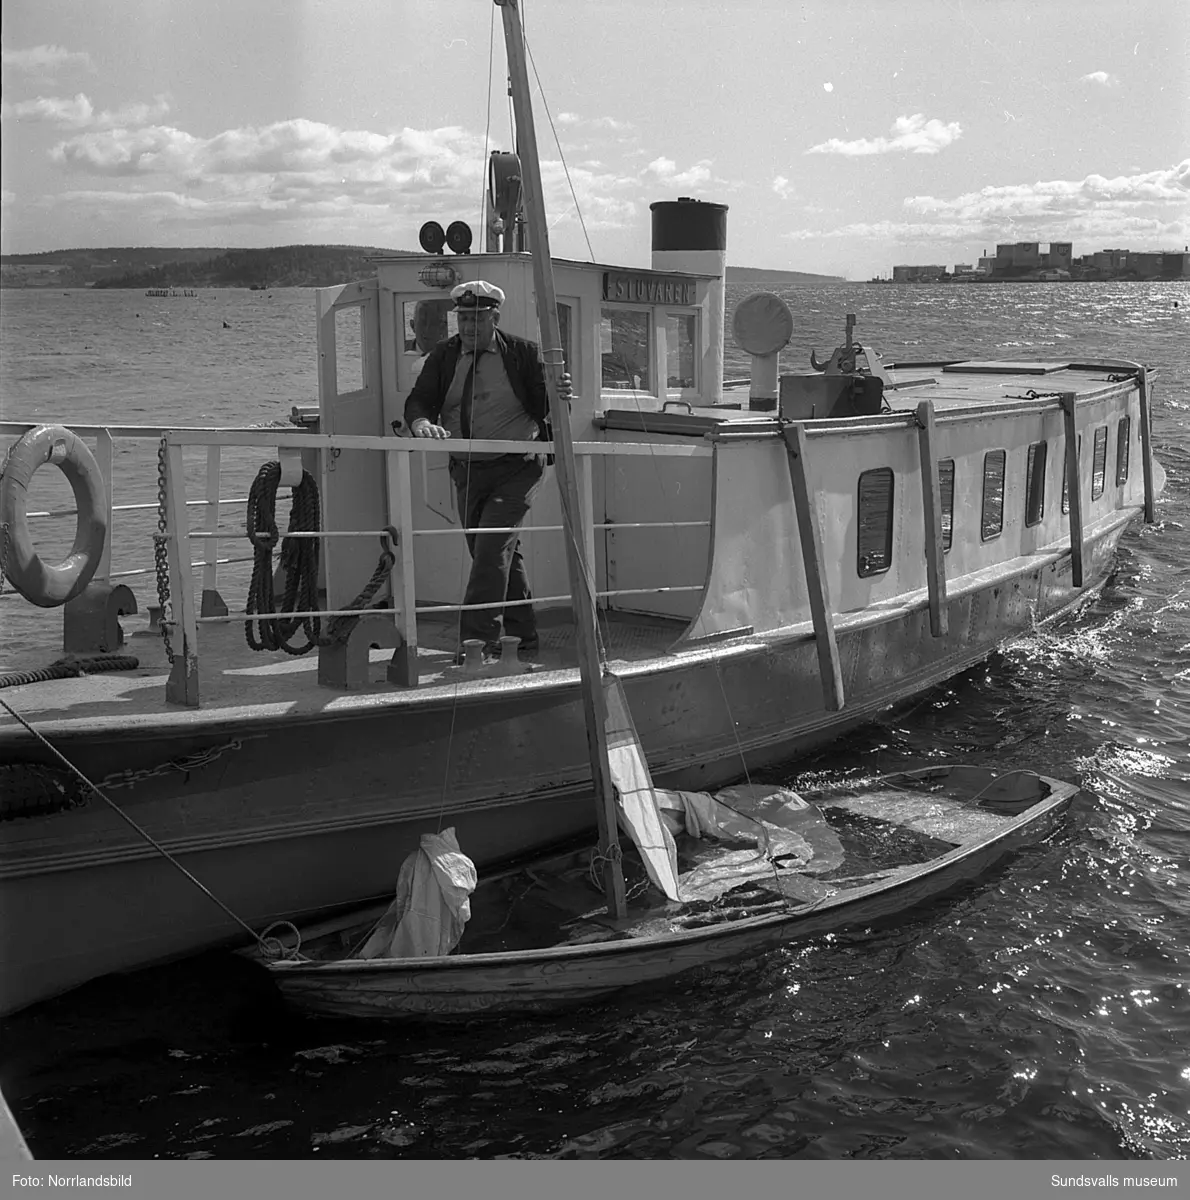 En liten kapsejsad segelbåt bogseras in i hamnen av båten Stuvaren.